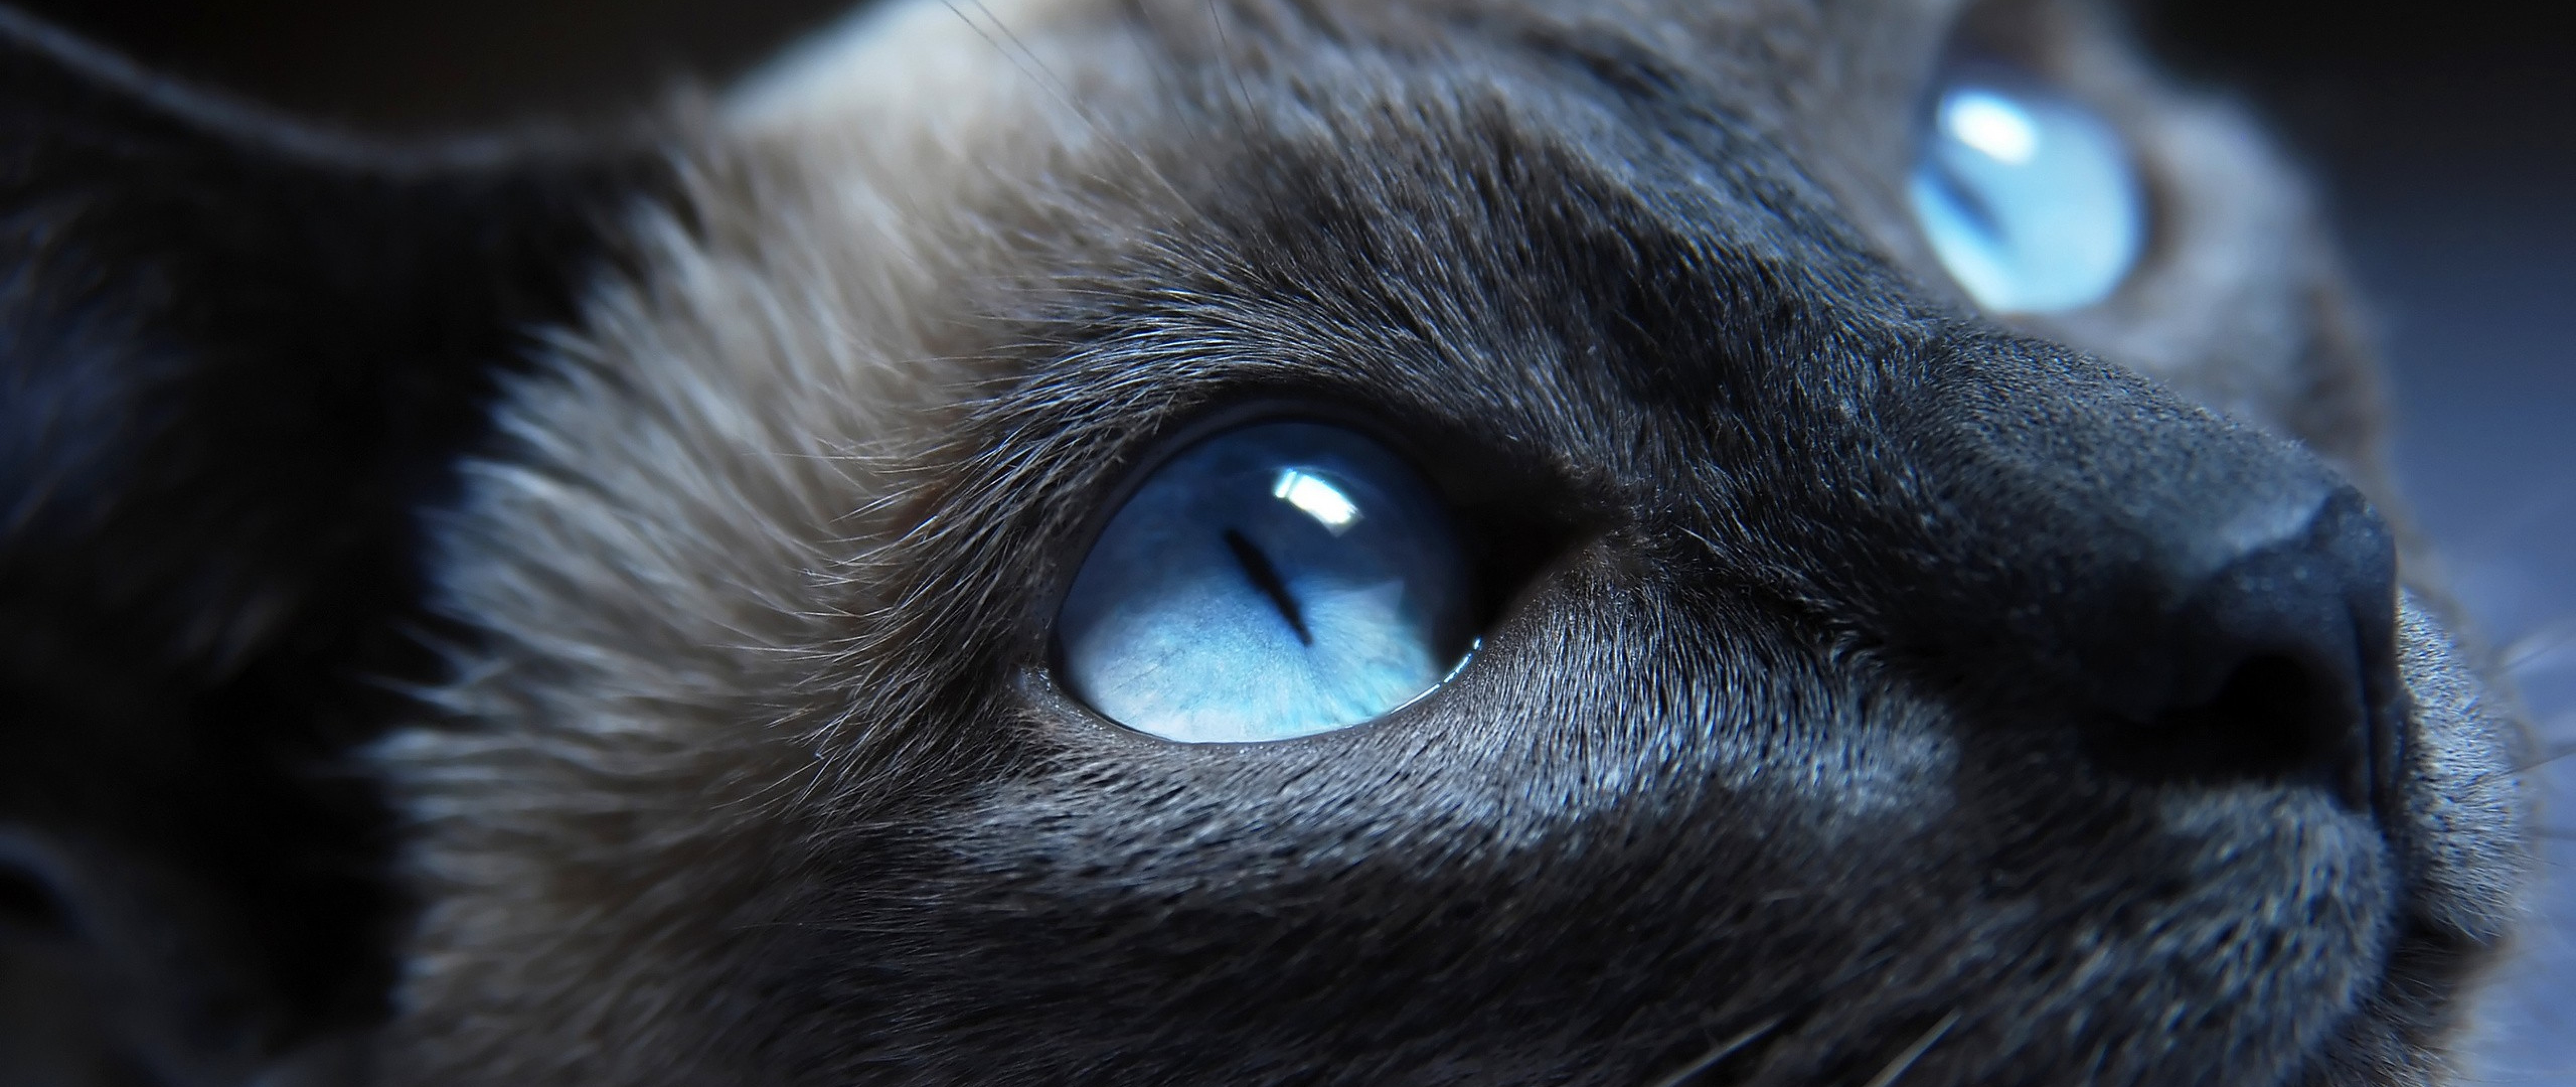 Blue Eyed Cat Wallpaper for Desktop and Mobiles 4K Ultra HD Wide TV - HD  Wallpaper 